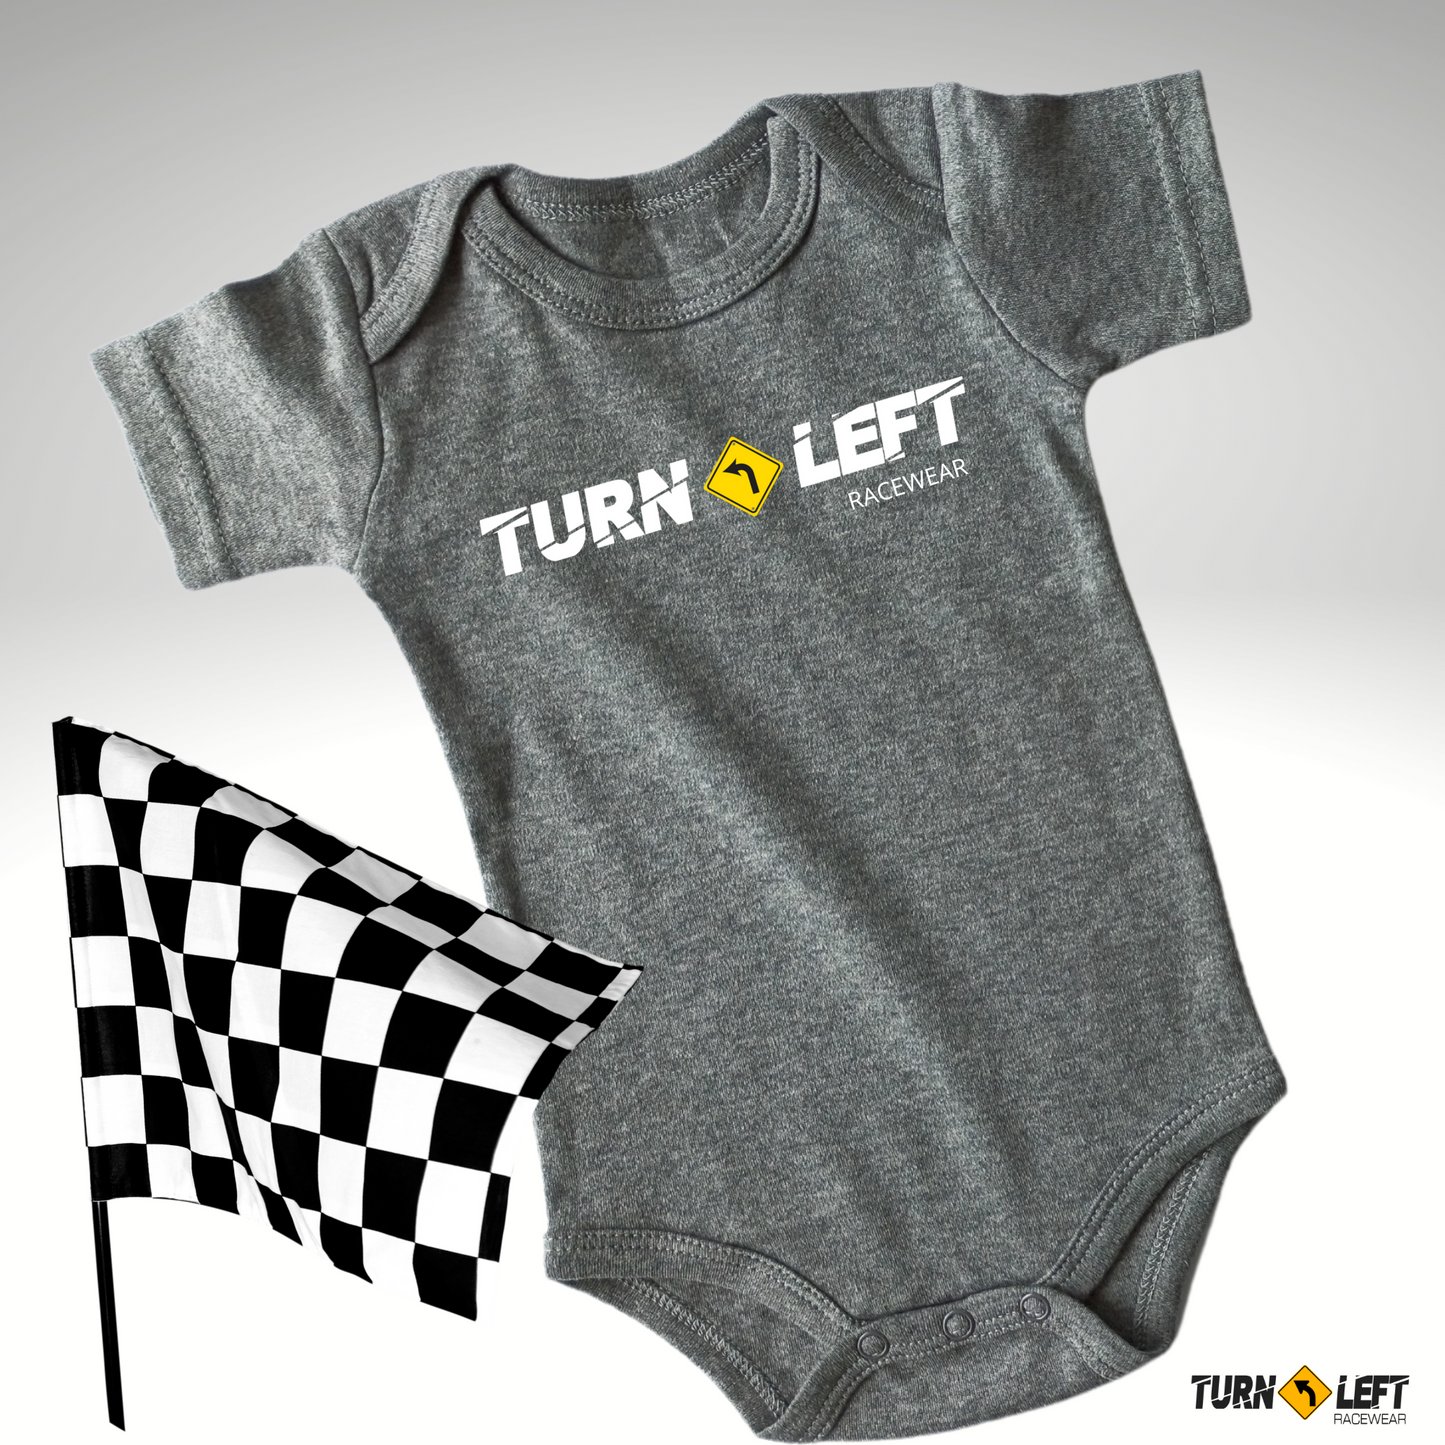 Turn Left Racewear Racing Logo Infant Bodysuits